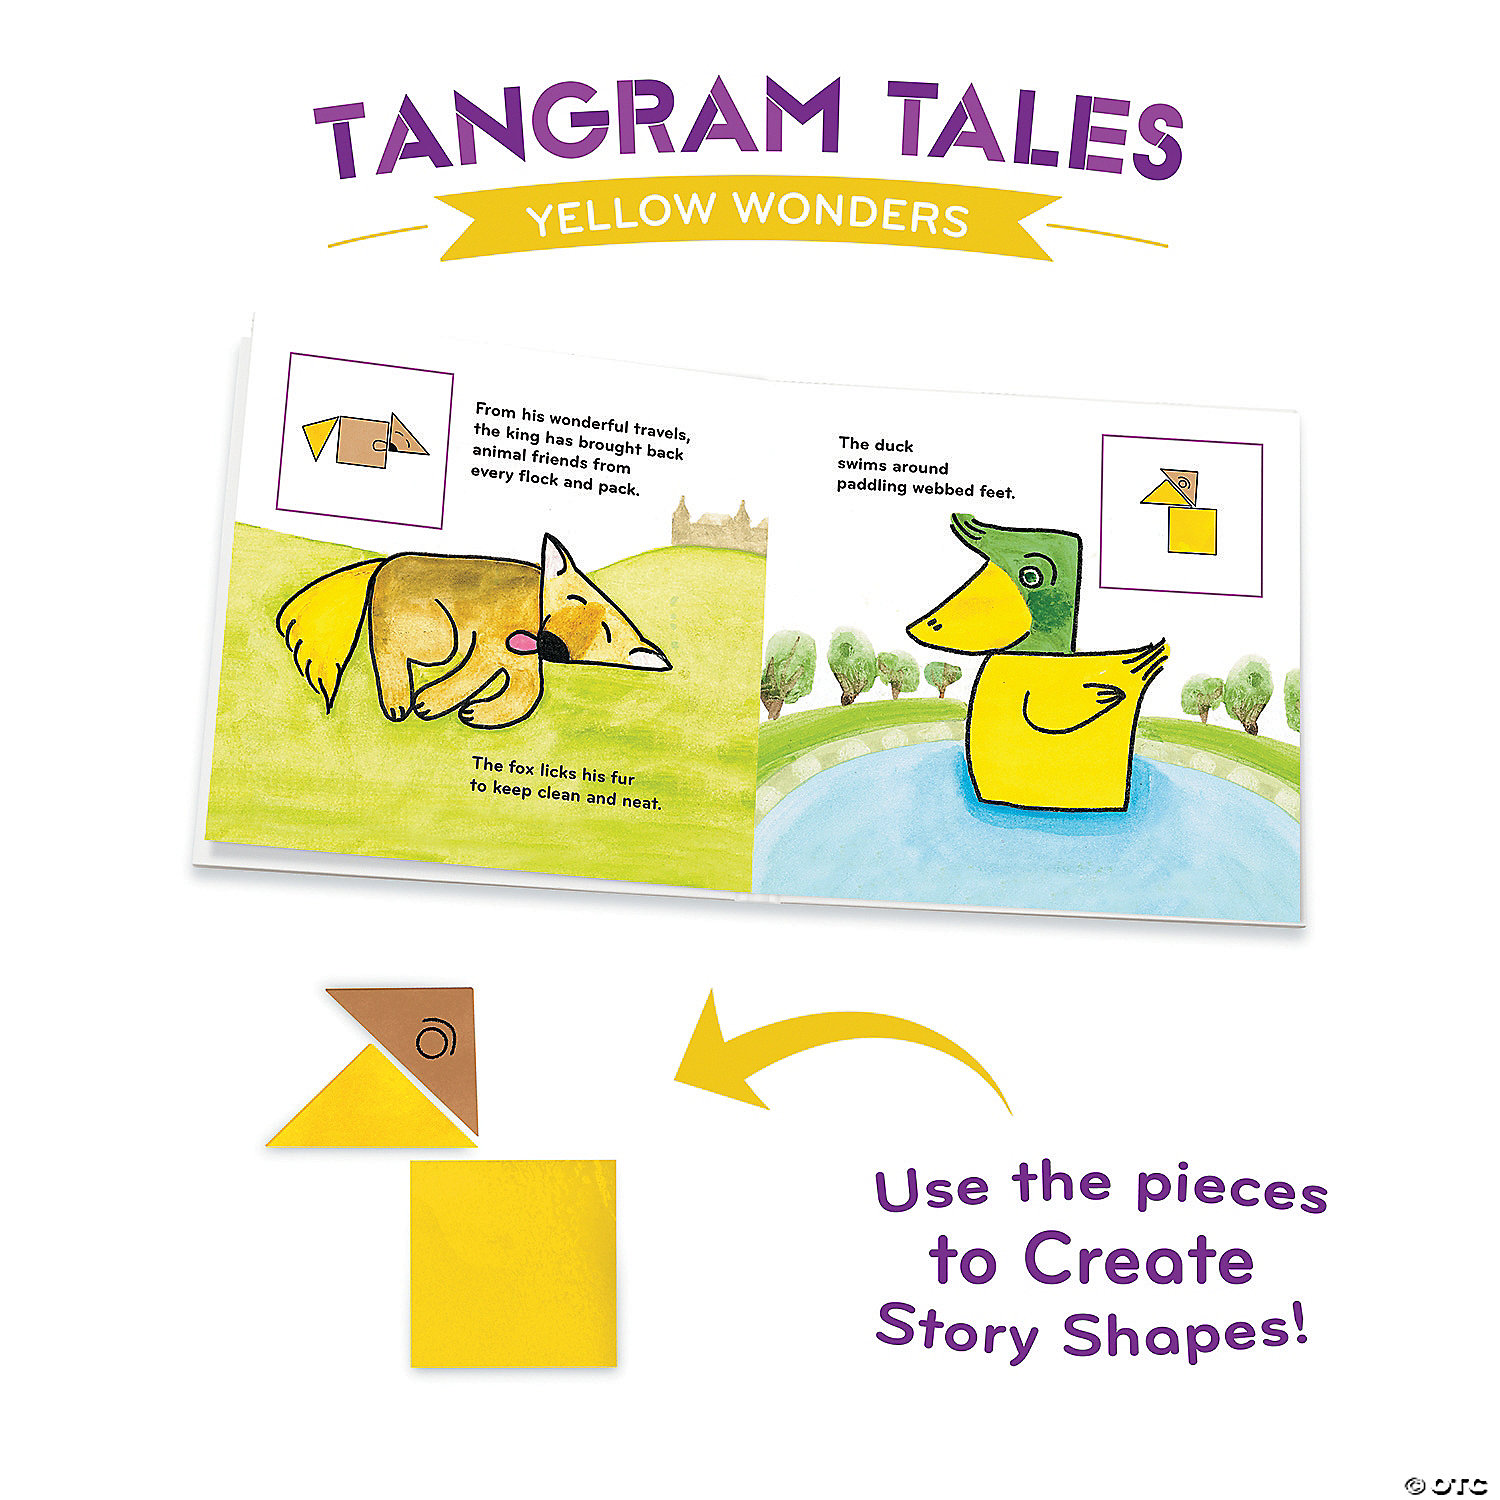 Tangram Tales: Yellow Wonders